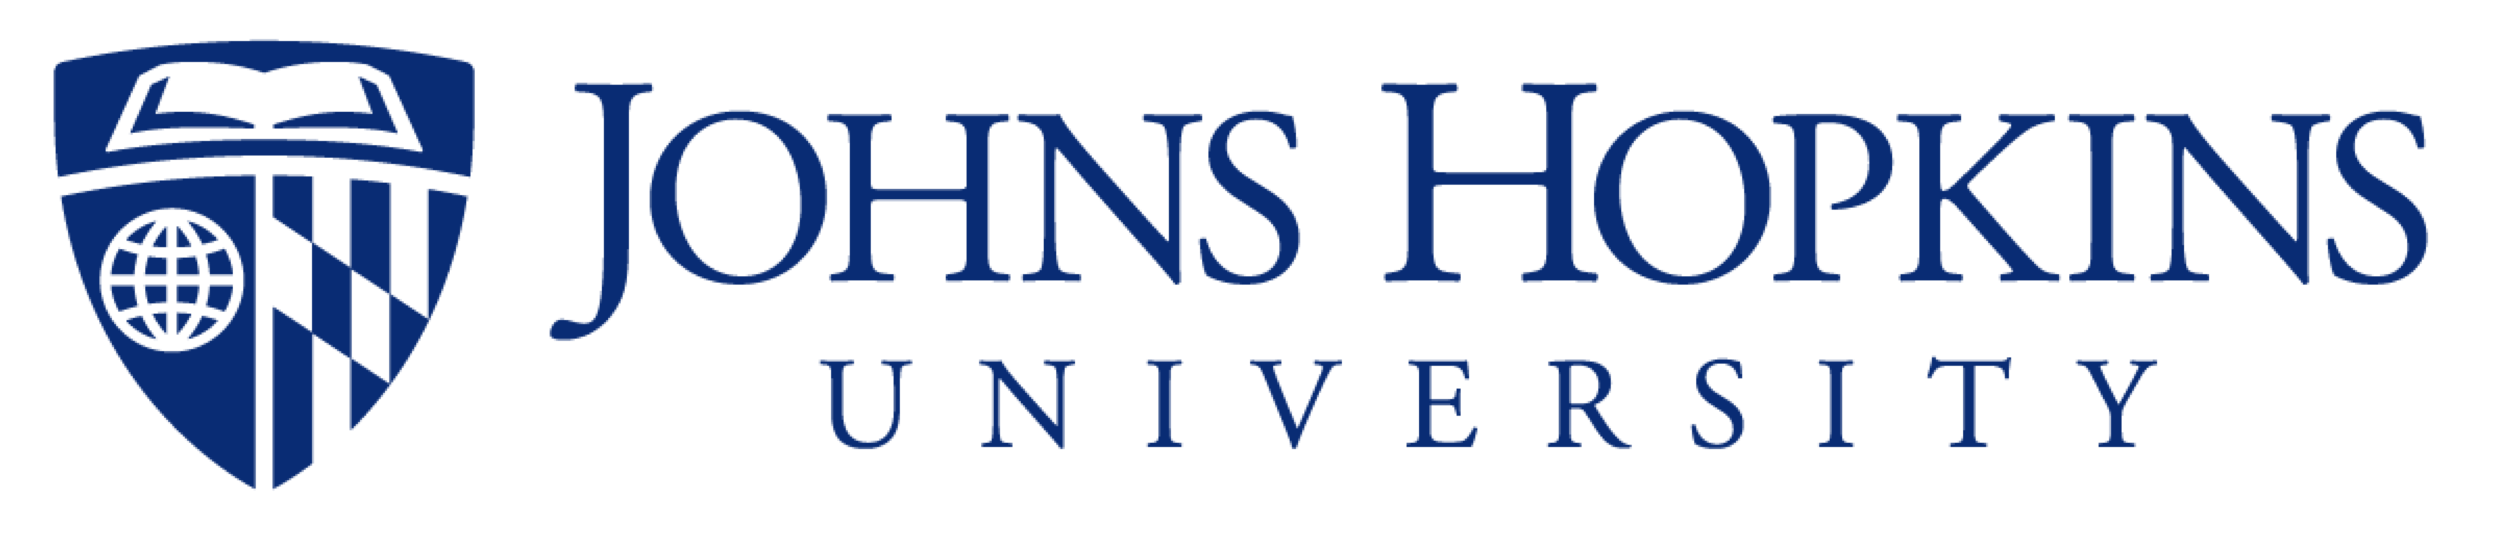 Johns_Hopkins_University_Lakhani_Coaching_Acceptance_List.png